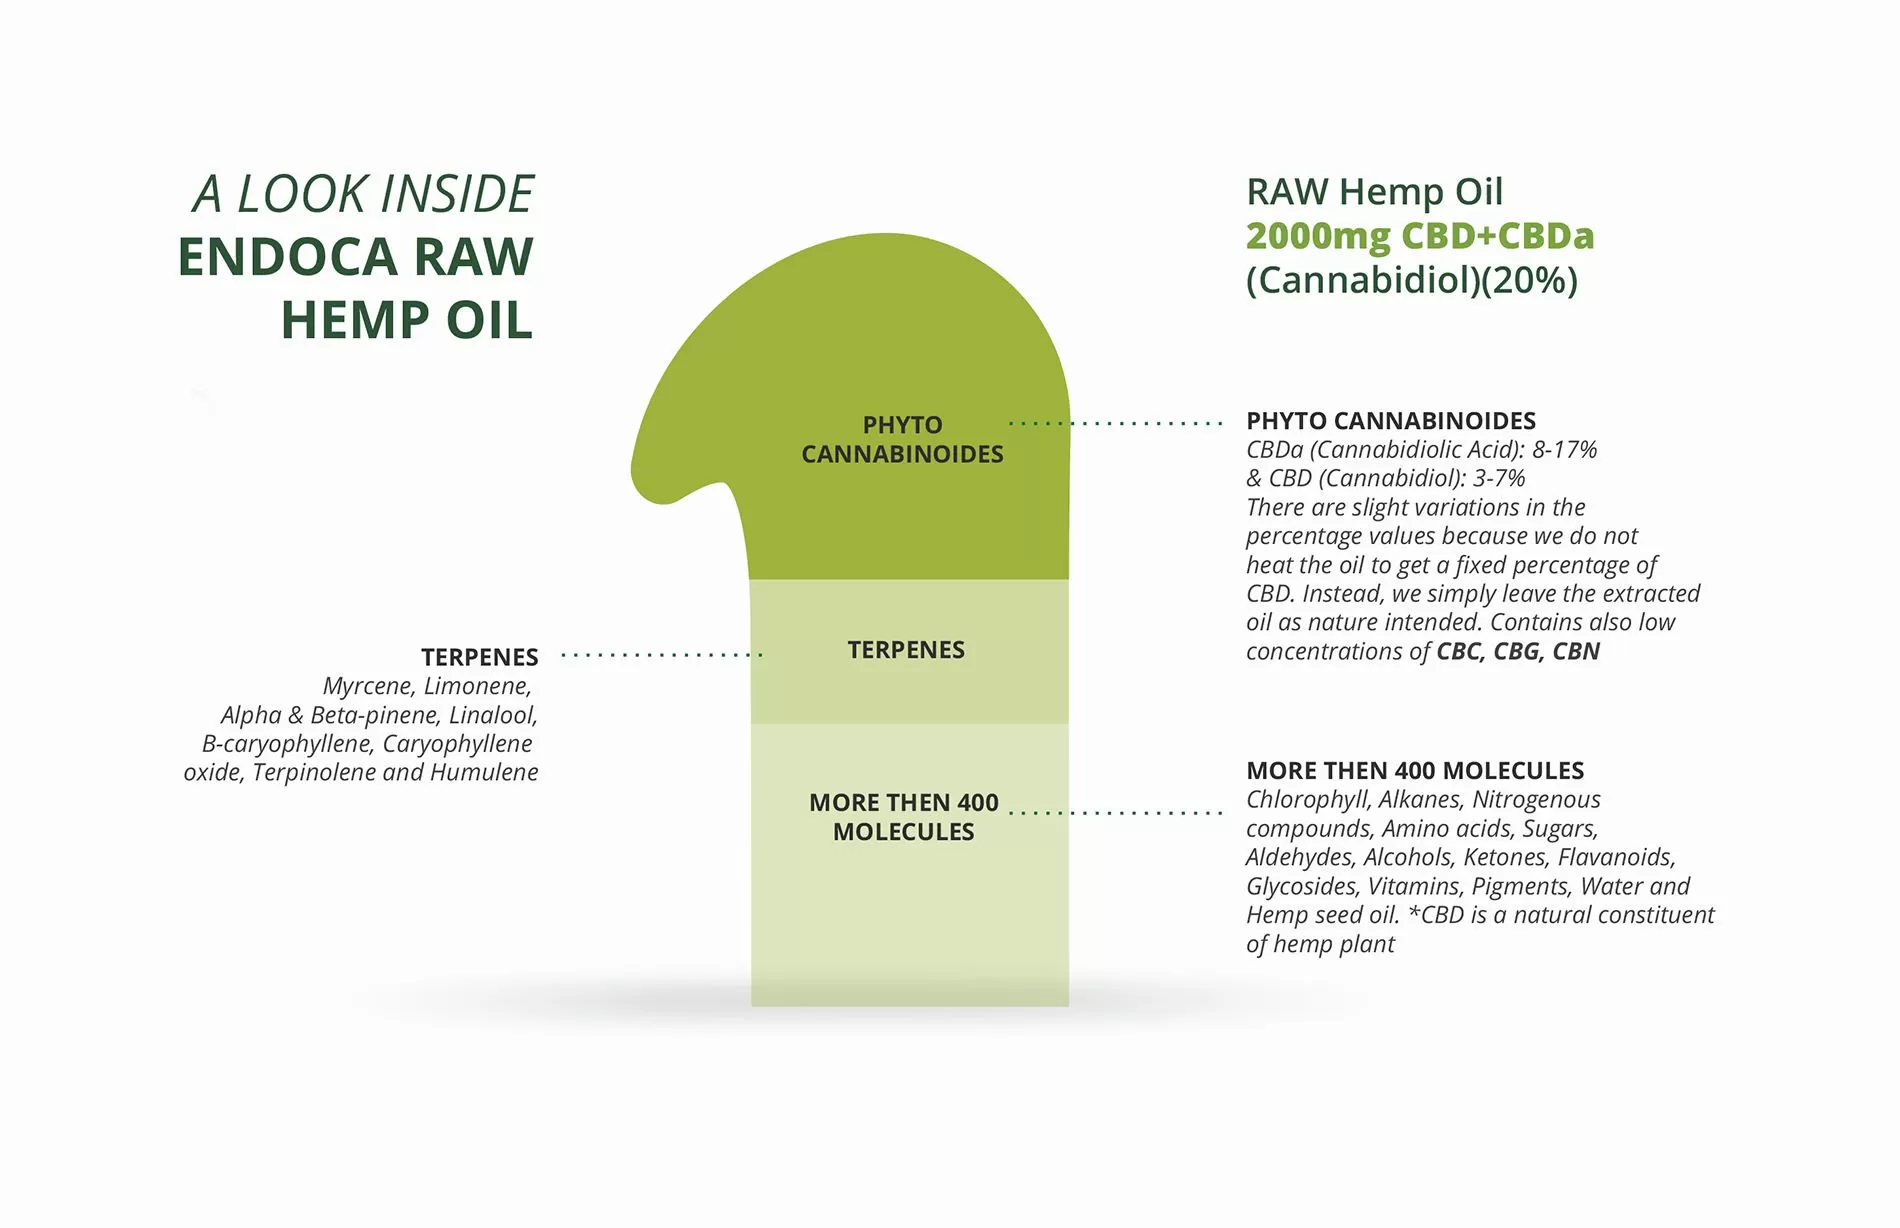 Endoca 2000mg CBD+CBDa RAW hemp oil paste extract contents